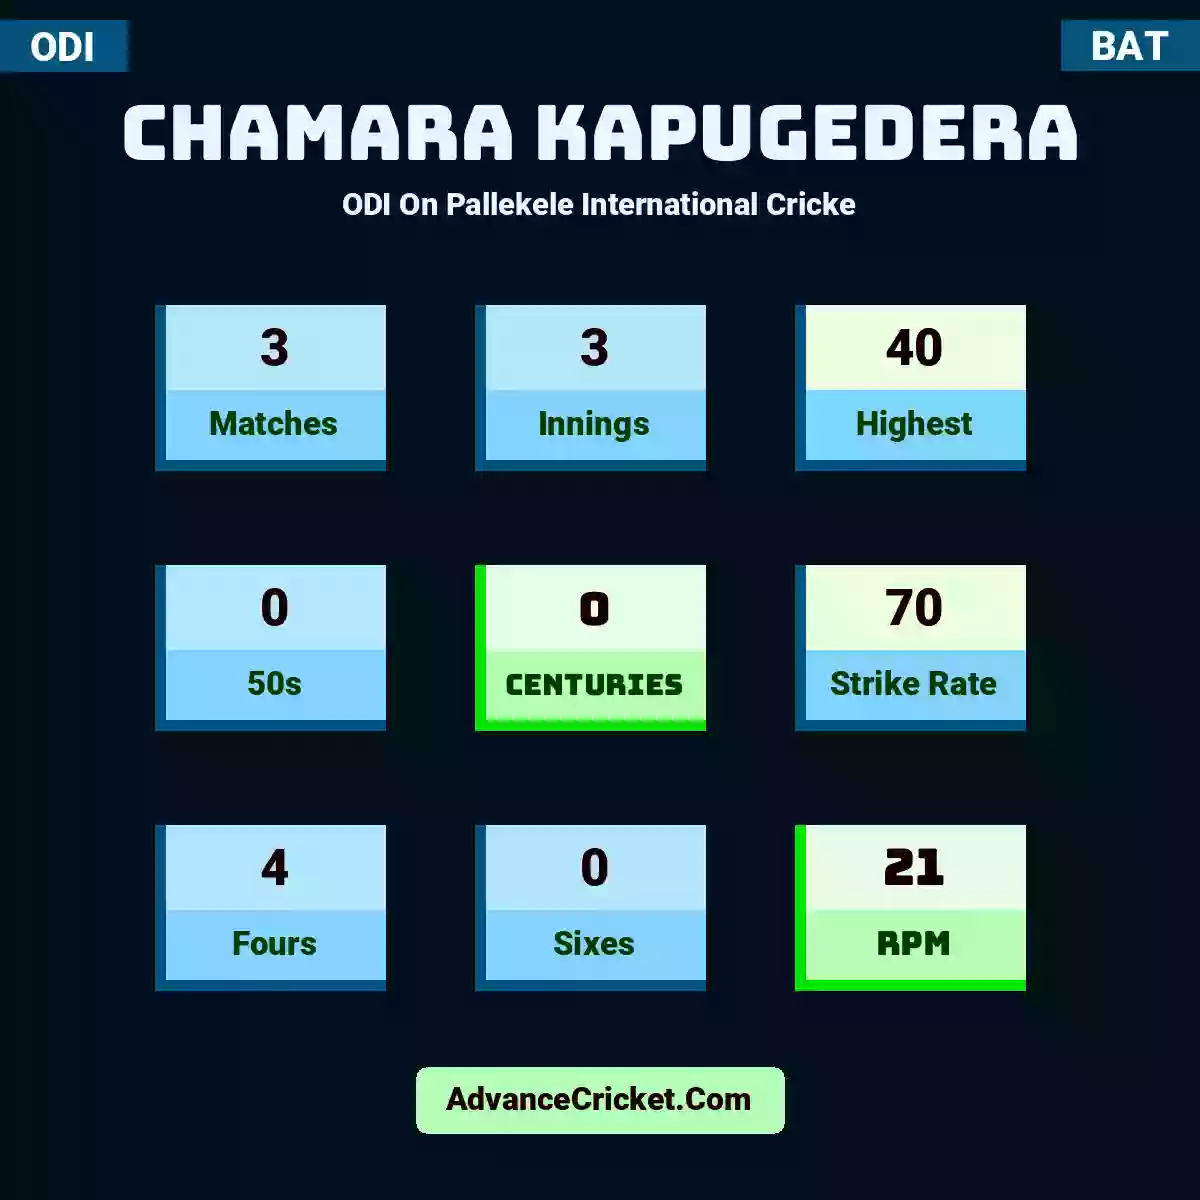 Chamara Kapugedera ODI  On Pallekele International Cricke, Chamara Kapugedera played 3 matches, scored 40 runs as highest, 0 half-centuries, and 0 centuries, with a strike rate of 70. C.Kapugedera hit 4 fours and 0 sixes, with an RPM of 21.